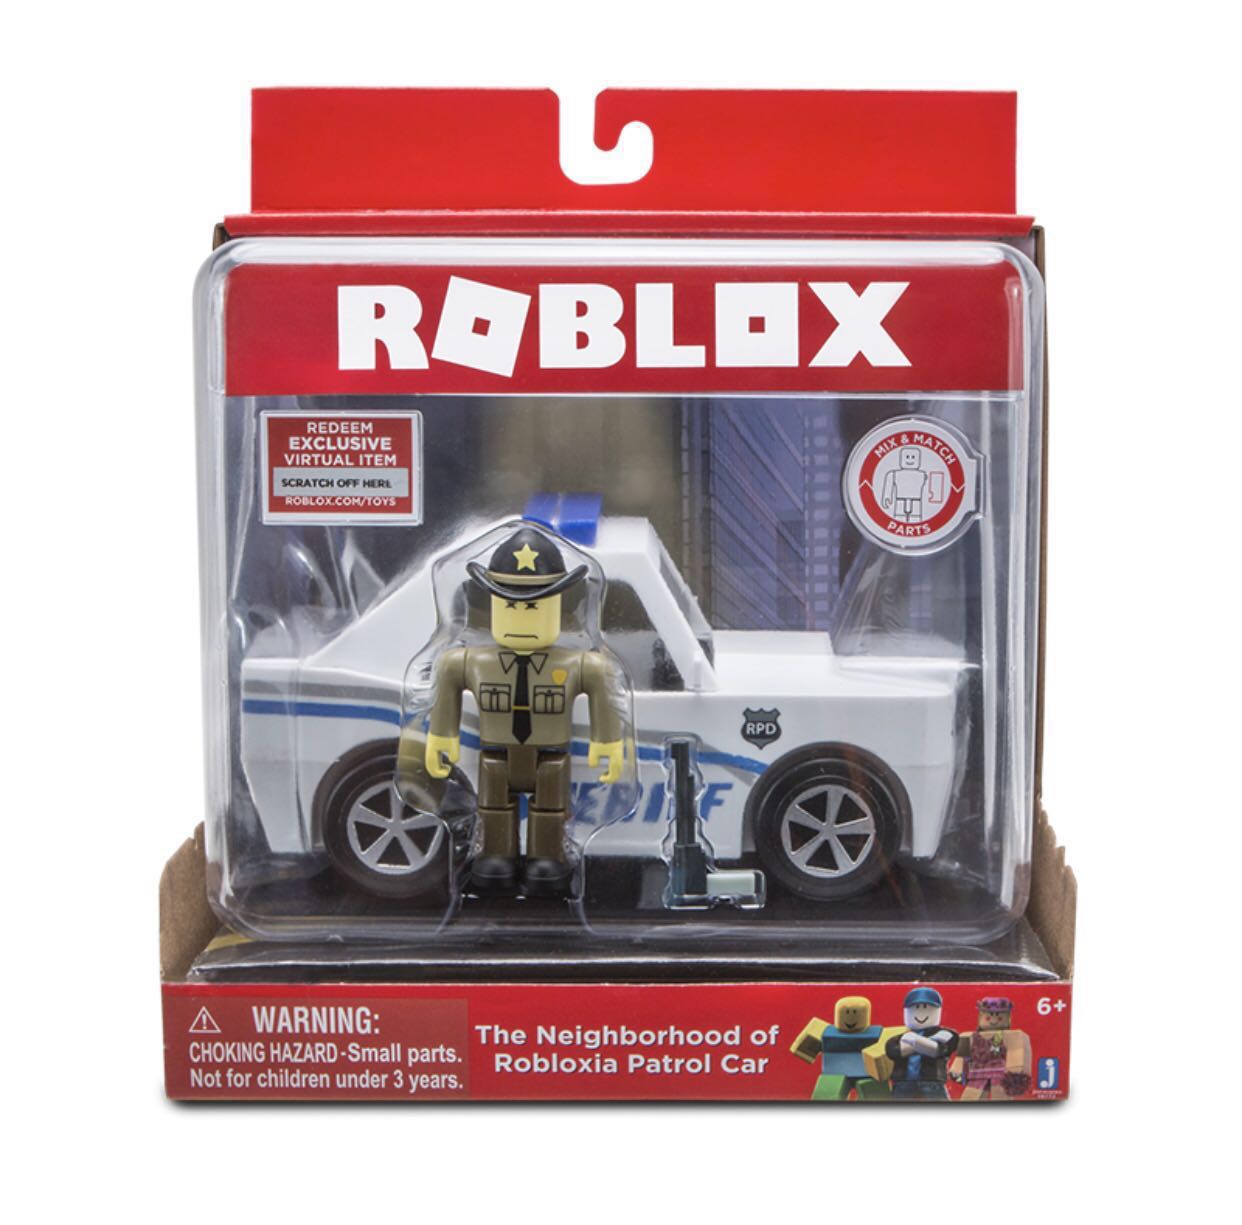 Roblox The Neighbourhood Of Robloxia Patrol Car Toys Games - roblox games neighborhood of robloxia